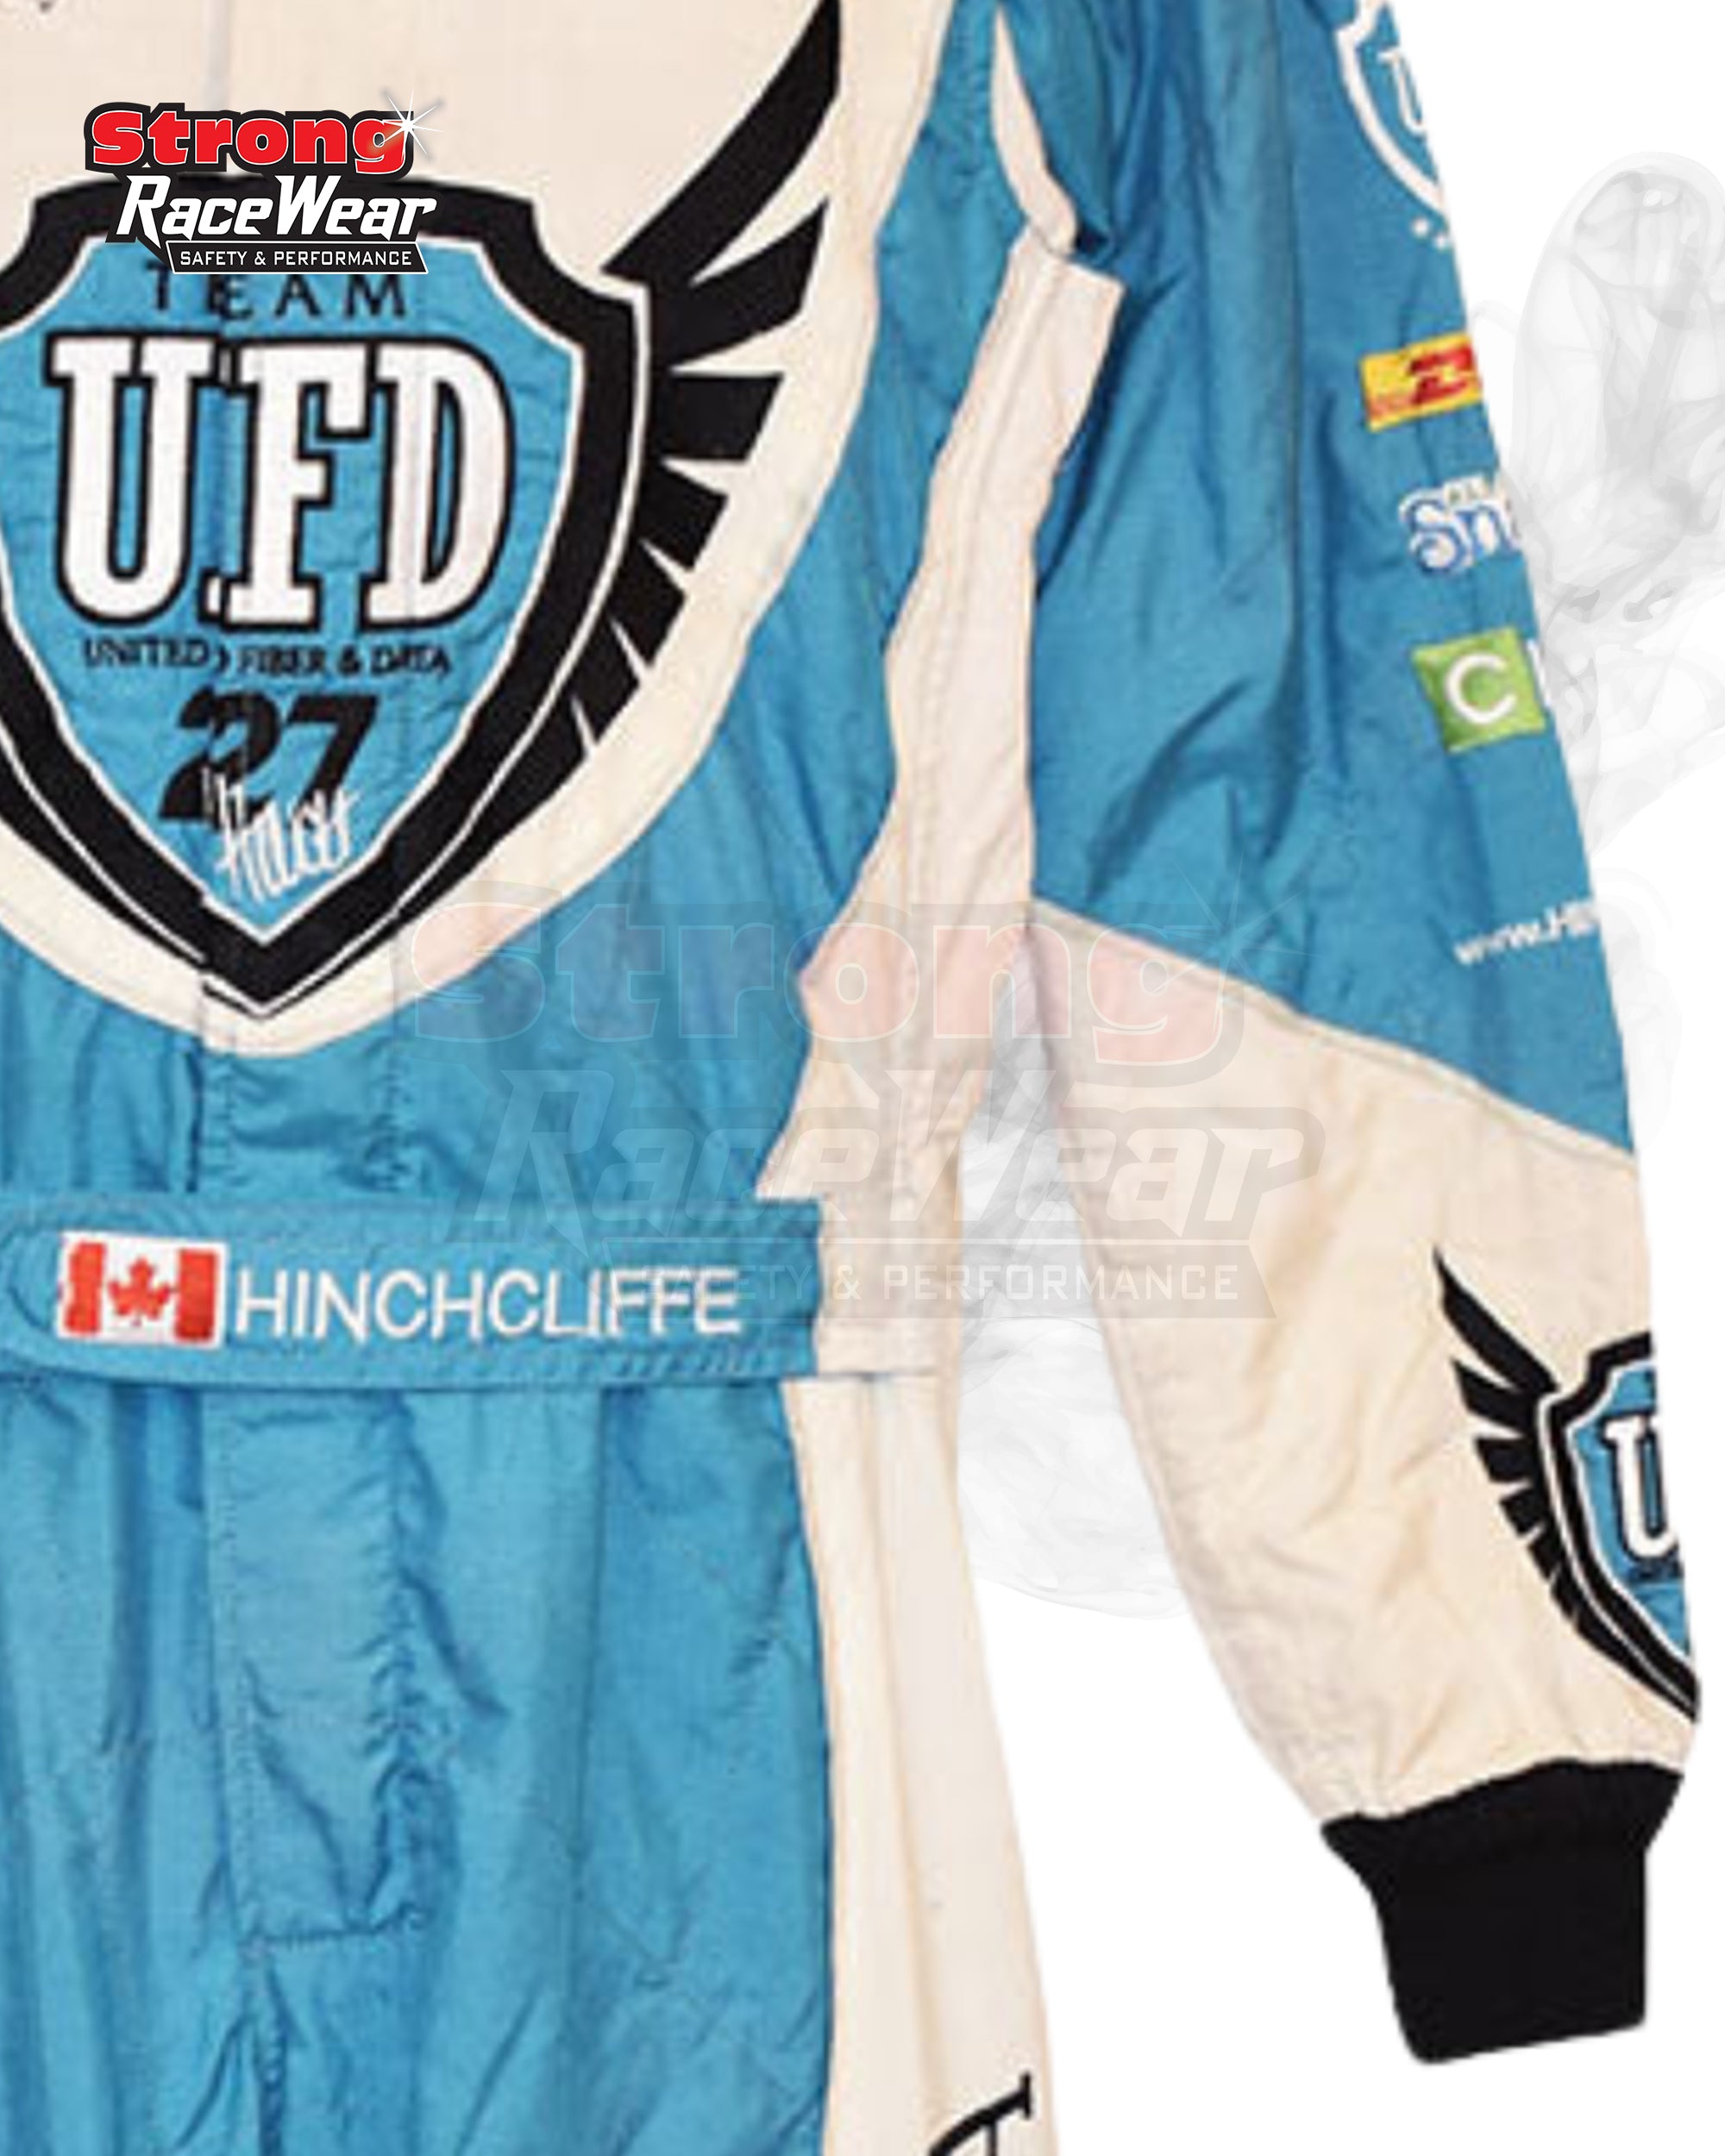 2014 James Hinchcliffe Autosport Indycar Race Worn Suit